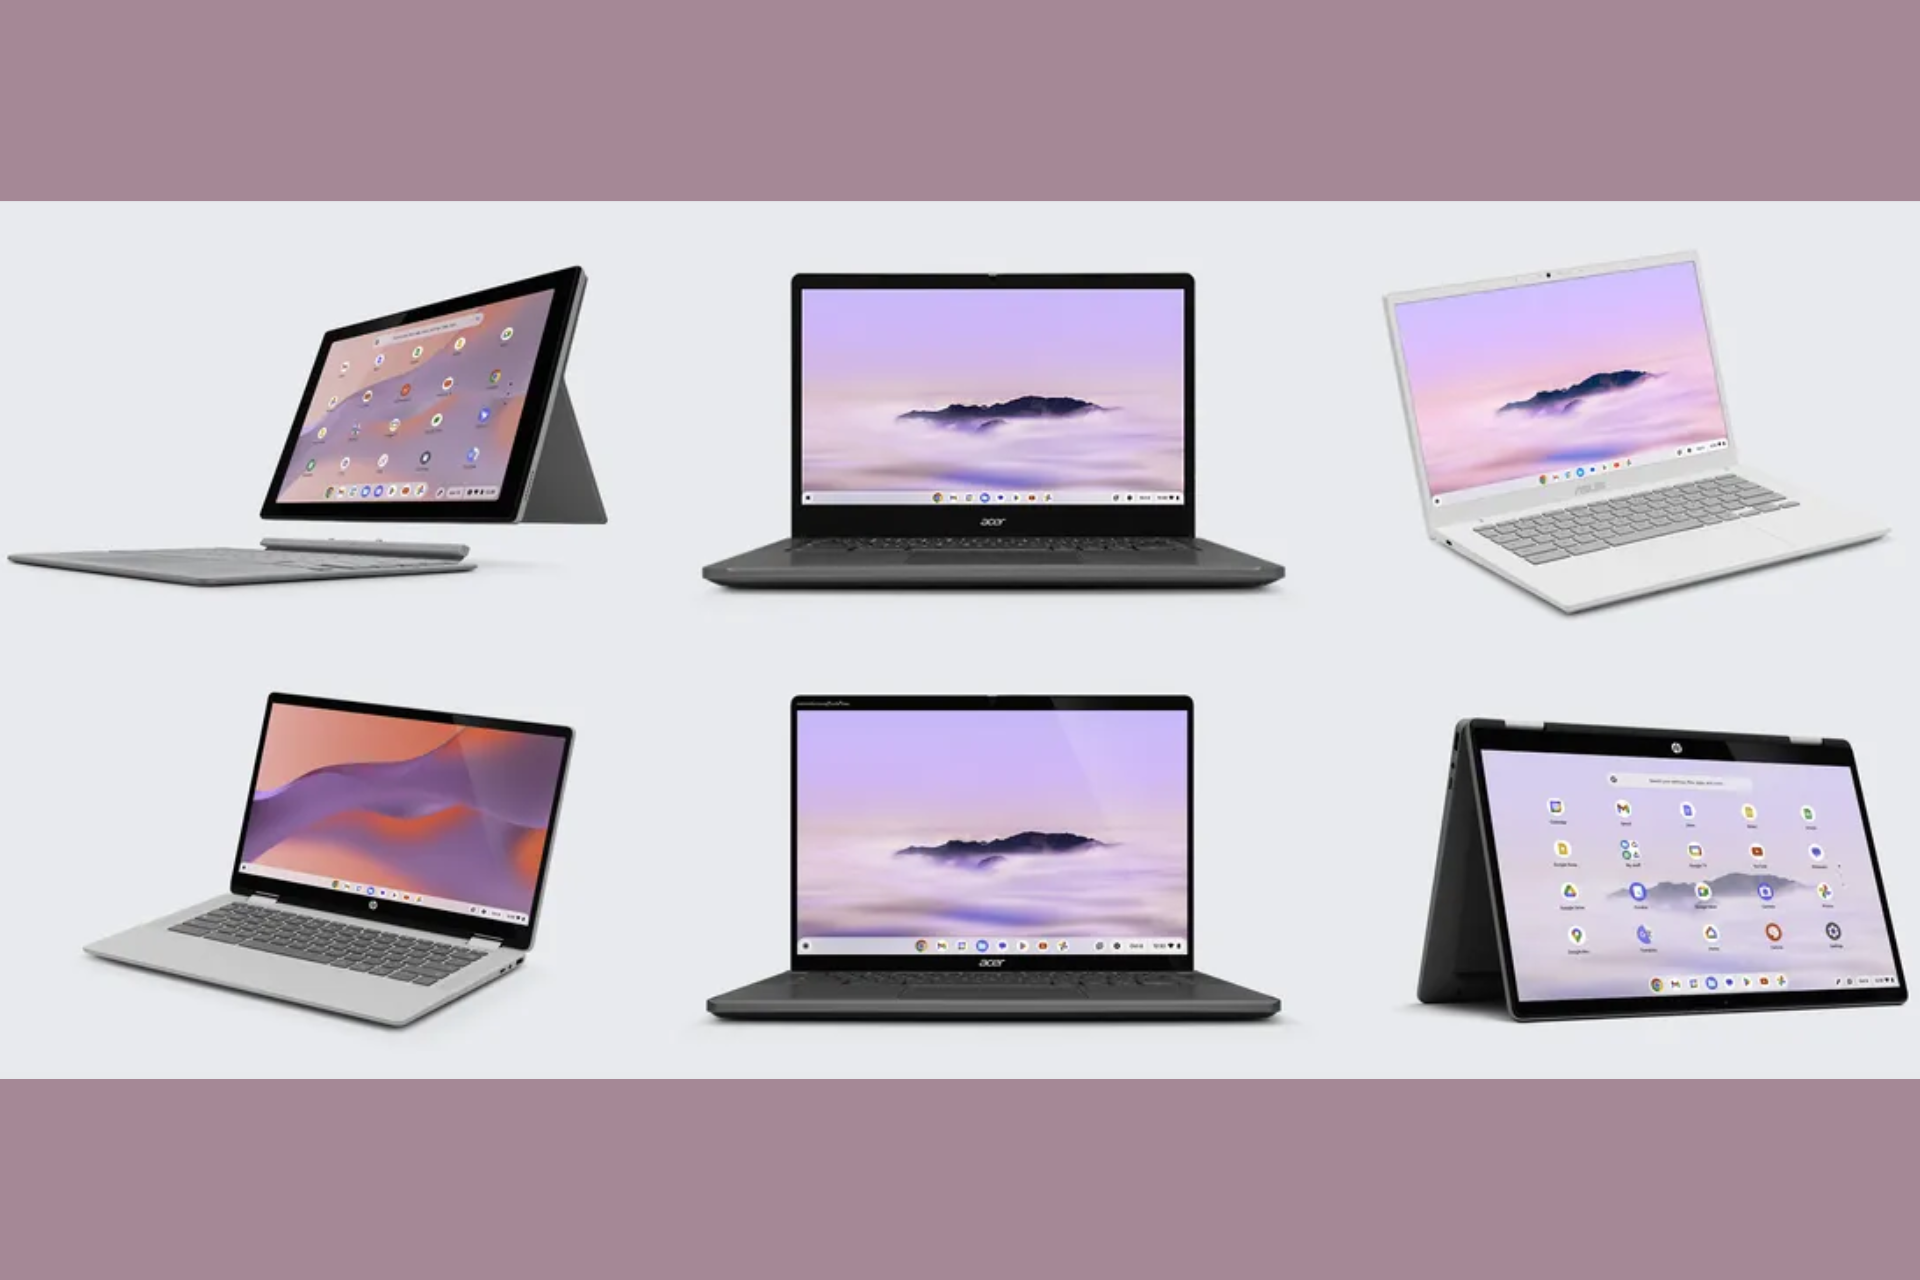 Google announced 6 new Chromebook Plus laptops